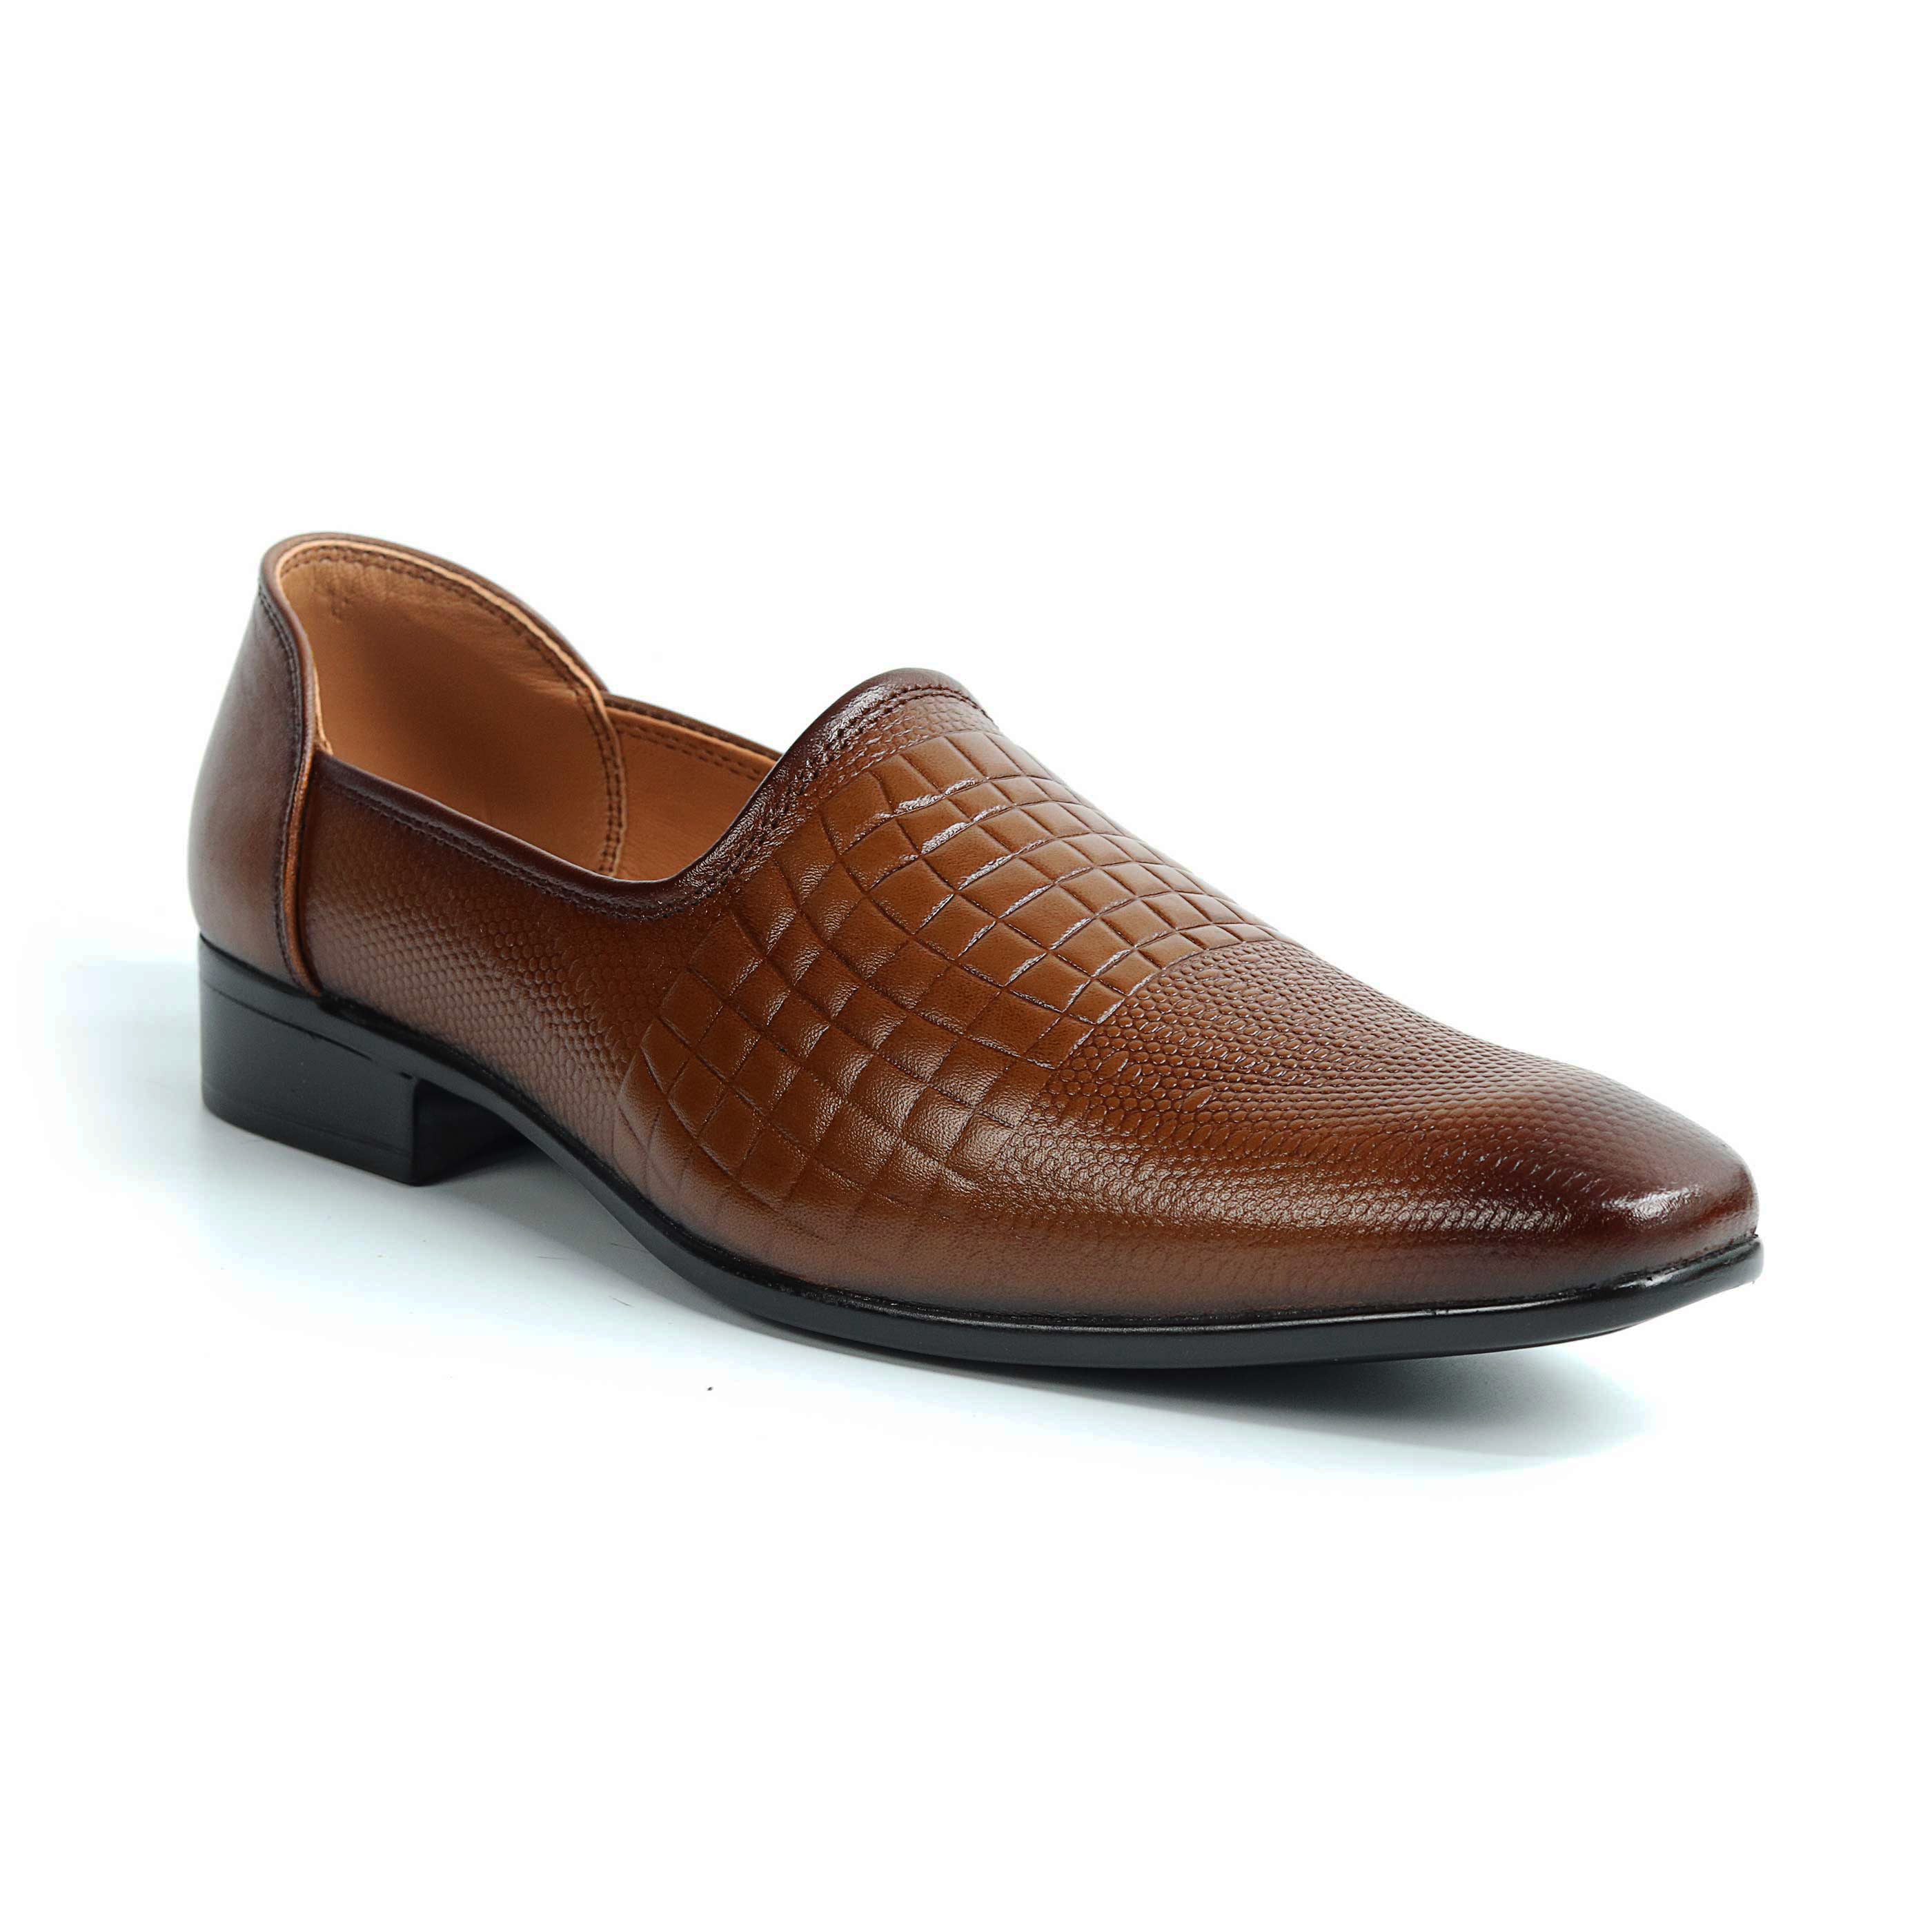 Zays Leather Premium Casual Shoe (Girish) For Men - ZAYSSF18